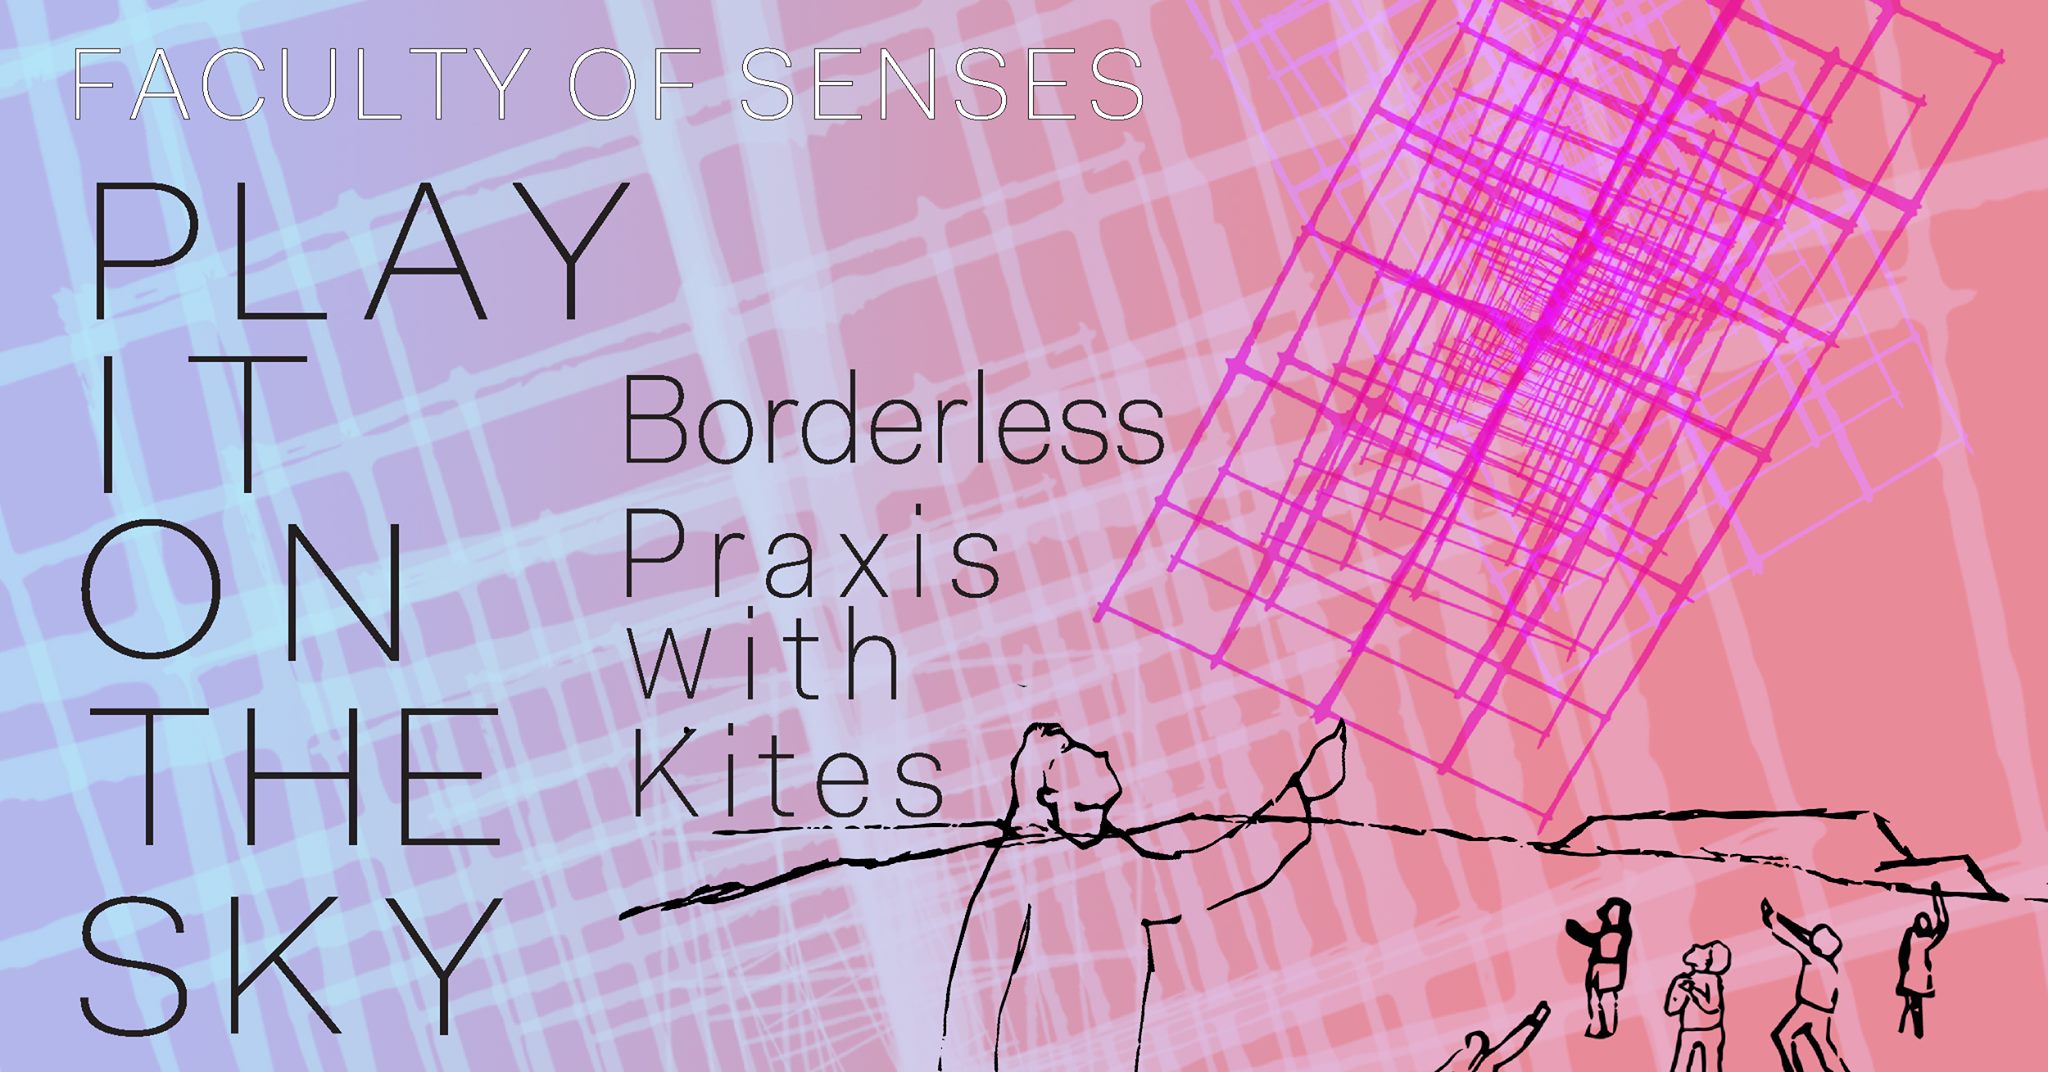 Play it on the Sky, Borderless praxis with kites, Støberiet, Copenhagen, September 17th 2021